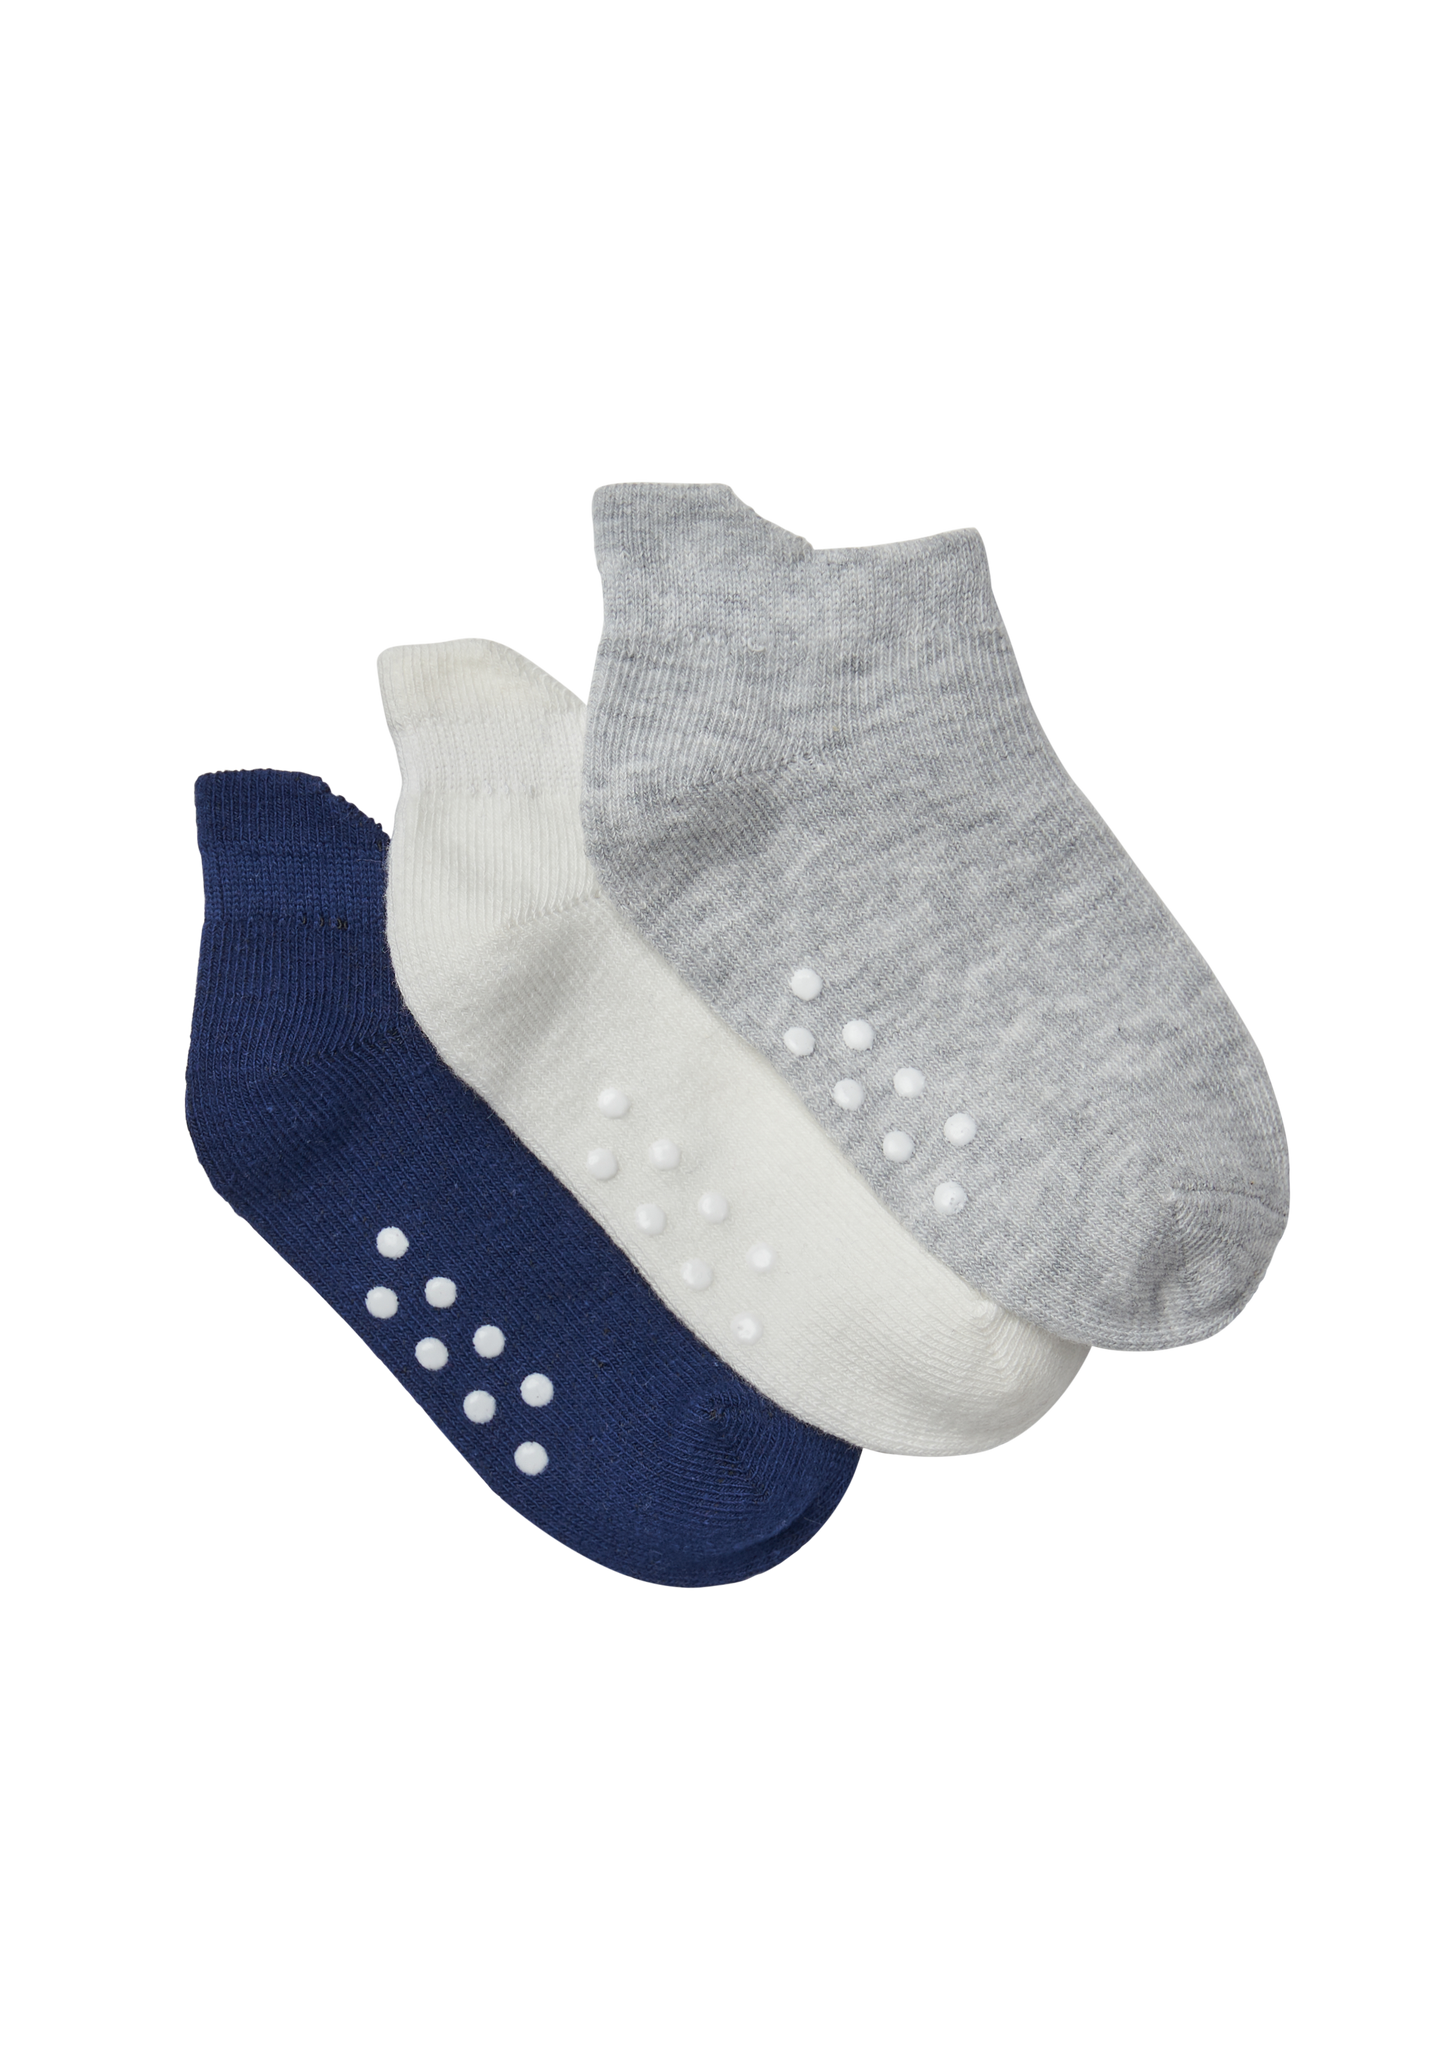 Simon de Winter 3 Pack Baby Ankle Socks in White, Grey and Navy